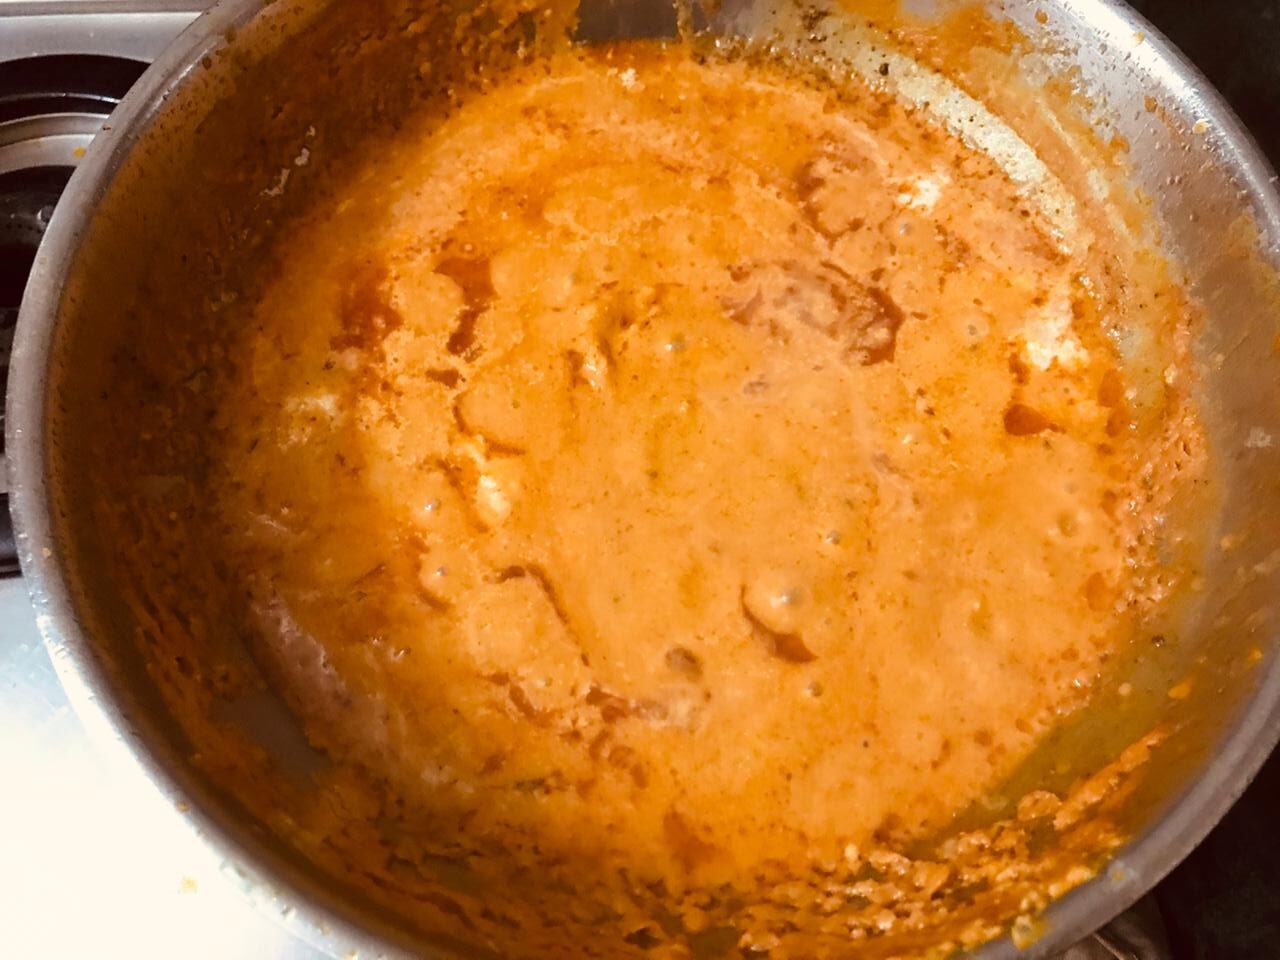 Jodhpuri Kacchi Haldi ki Subzi Recipe - Fresh Turmeric Root Curry